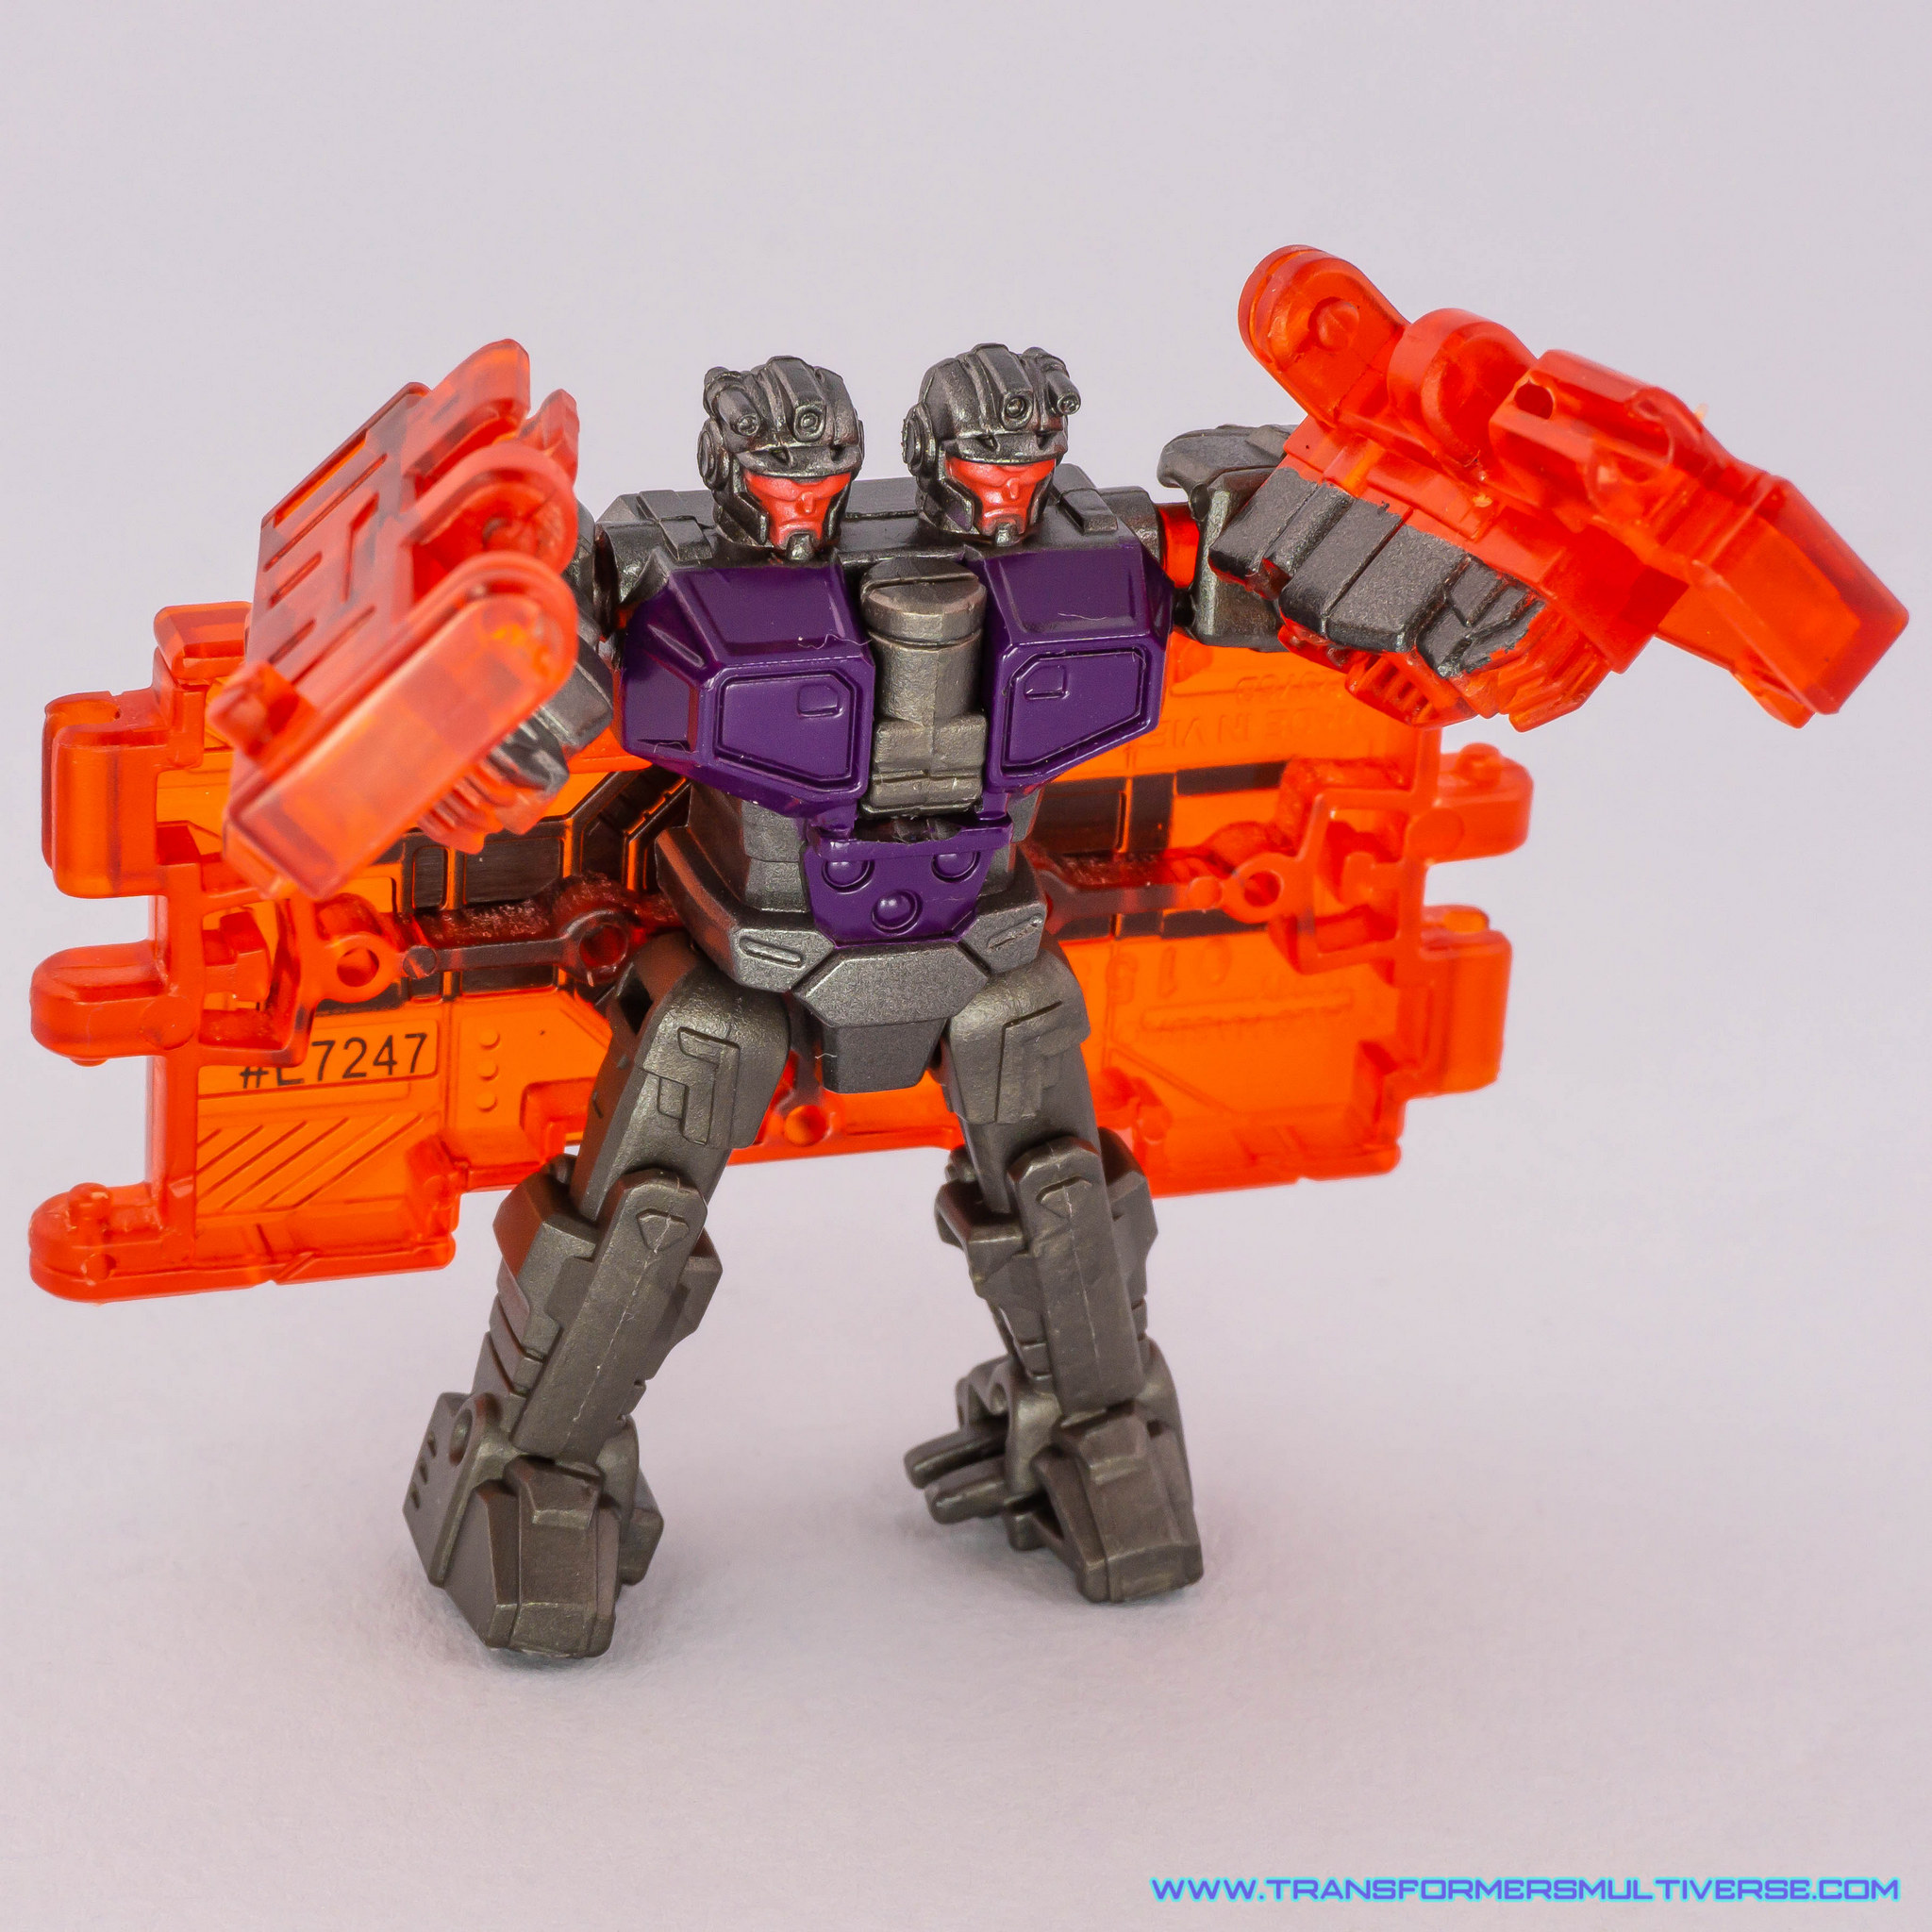 Transformers Earthrise Doublecrosser robot mode